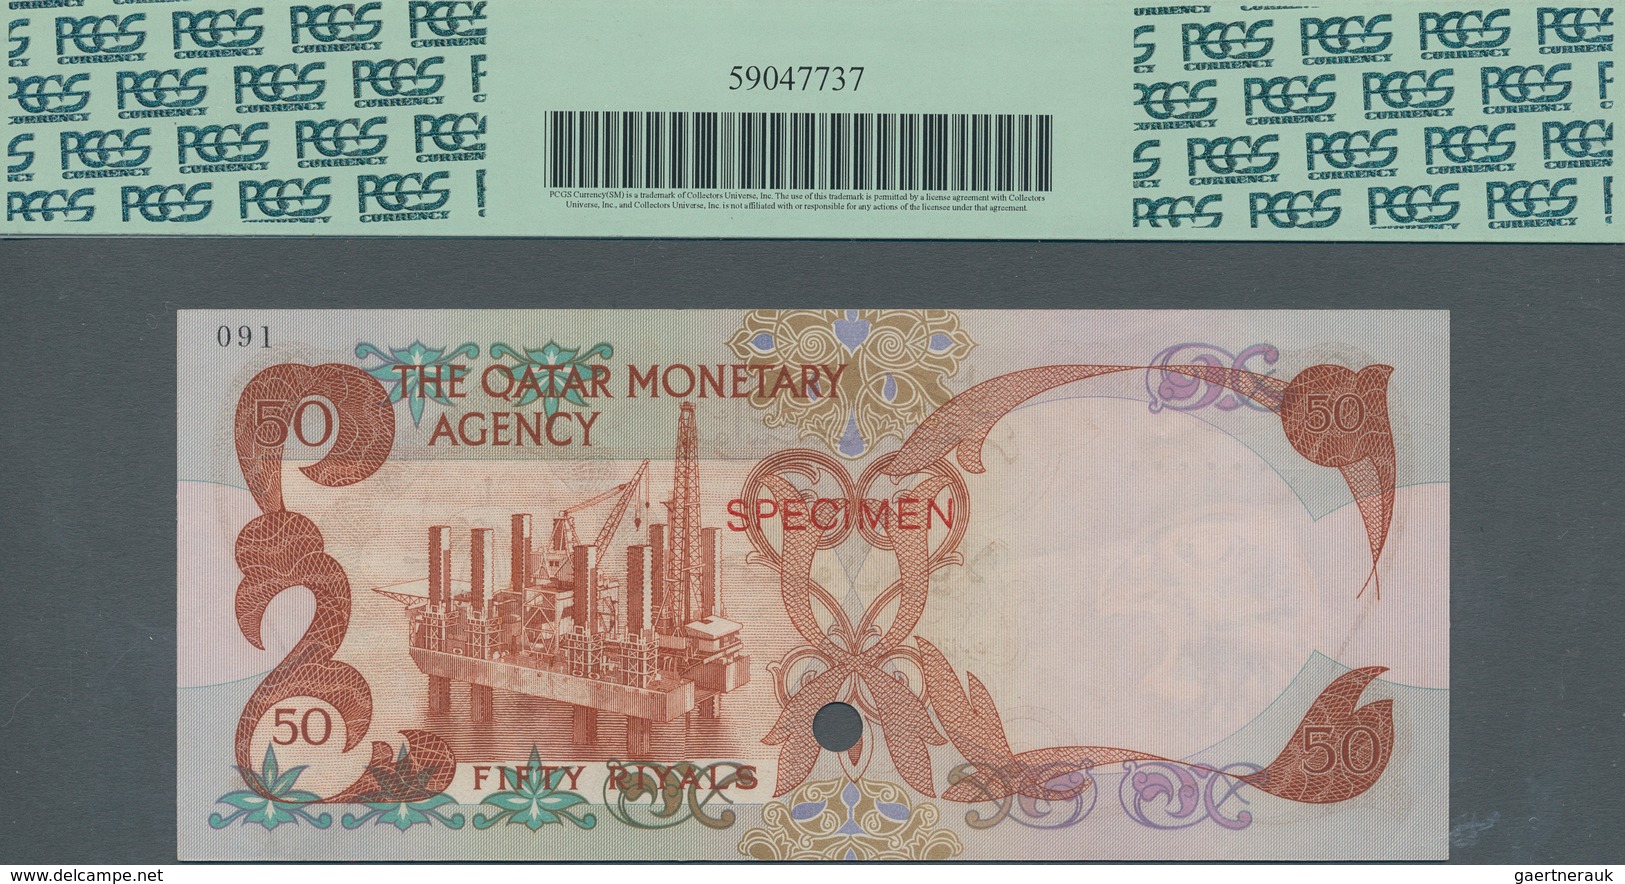 Qatar: Monetary Agency 50 Riyals ND(1973) Color Trial SPECIMEN, P.4cts With Punch Hole Cancellation - Qatar